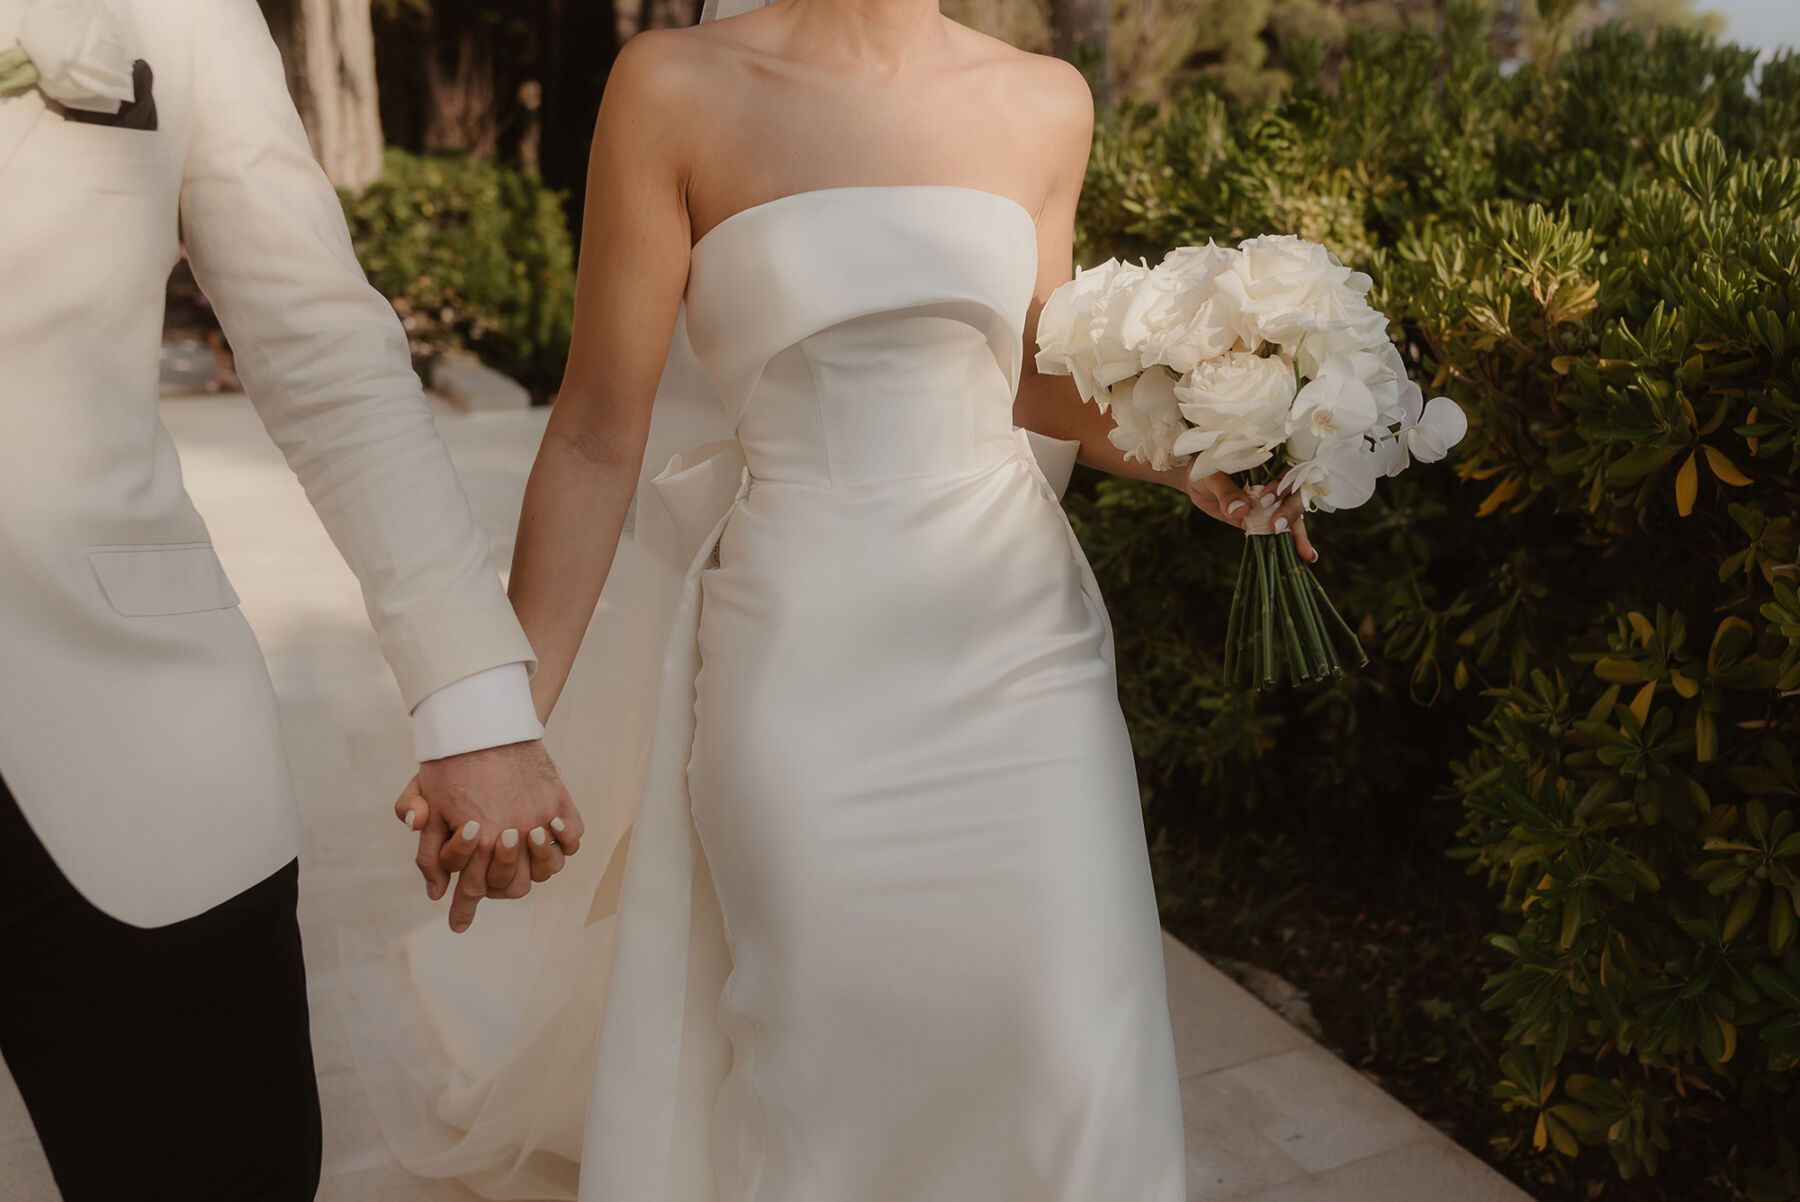 Bride with white nail varnish holding hands with groom in white tuxedo. Bride wears Eva Lendel wedding dress.